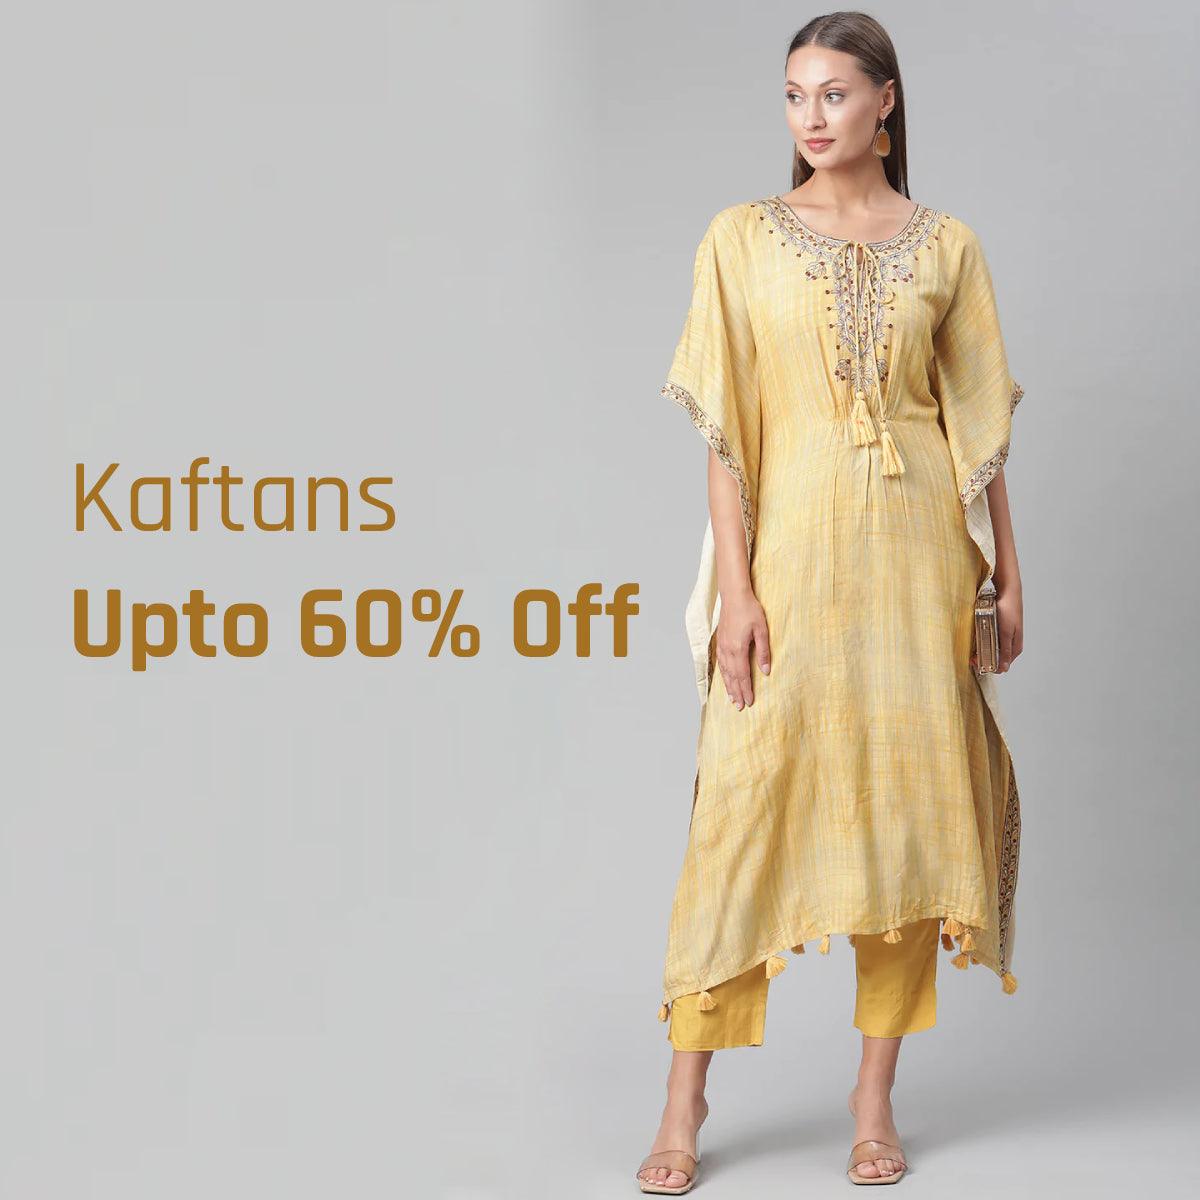 Upgrade Your Wardrobe With Stylish Kaftans Dresses | Divena World ...